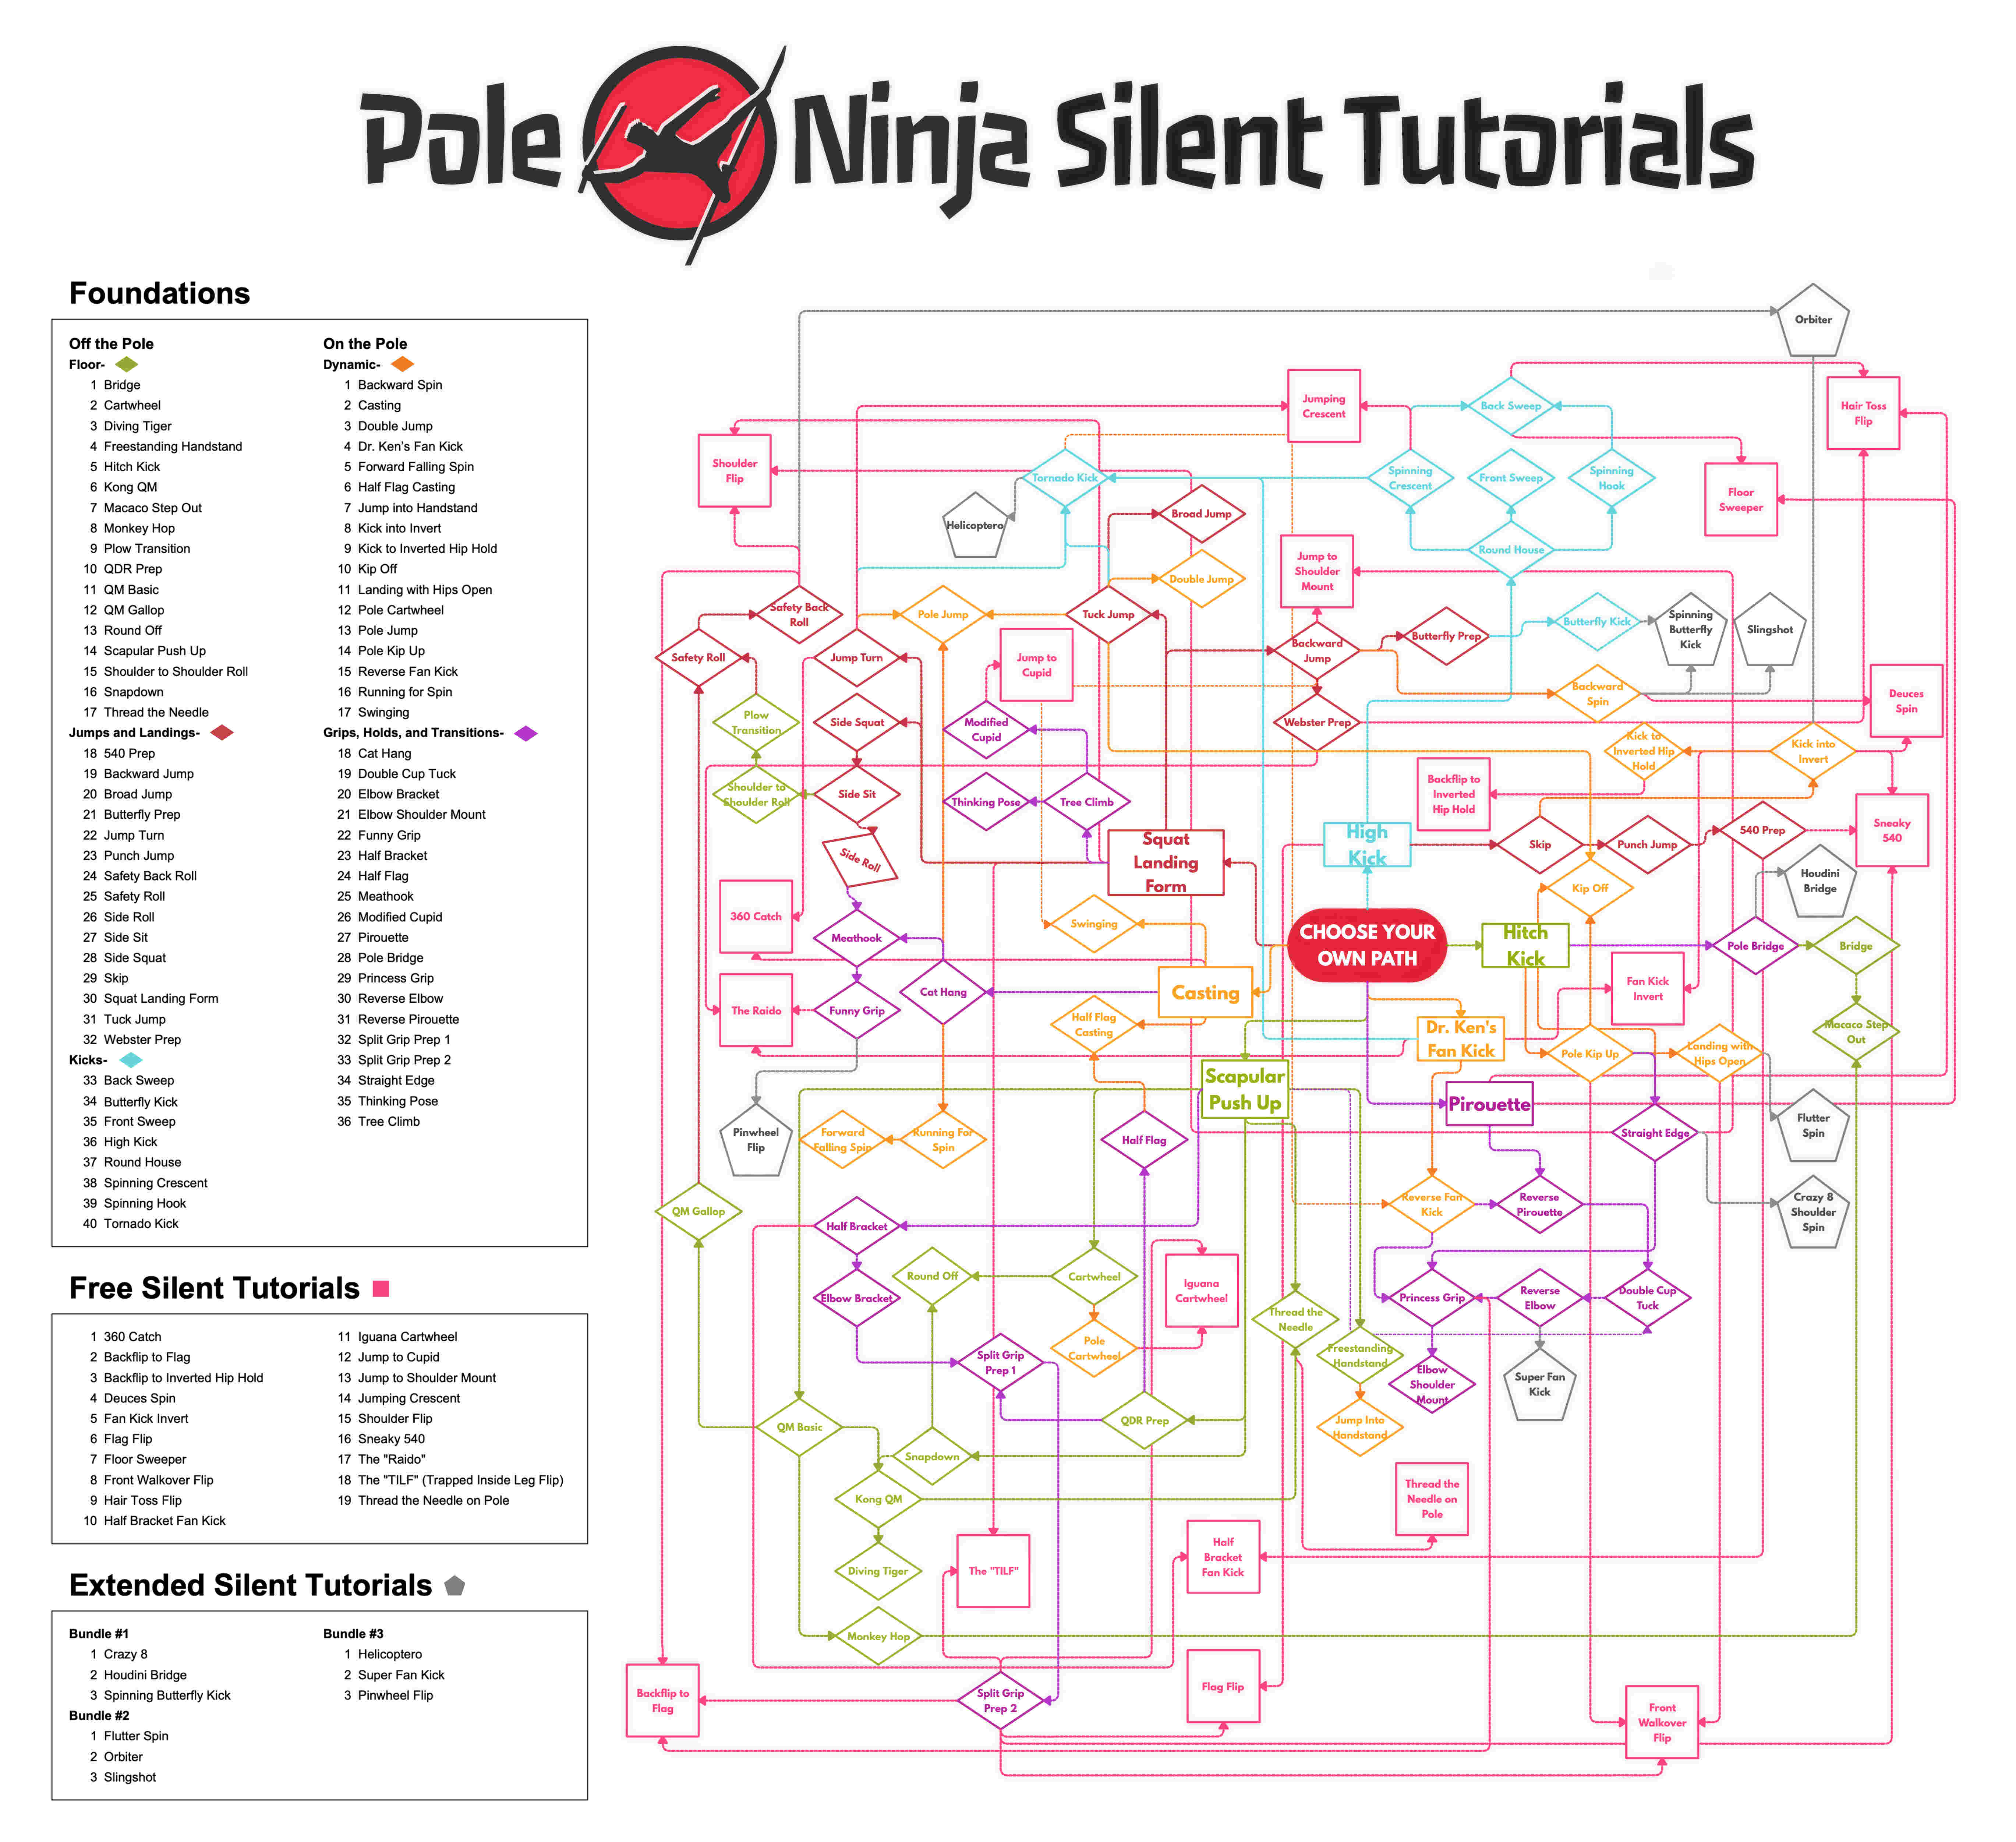 Pole Ninja Silent Tutorials Flow Chart